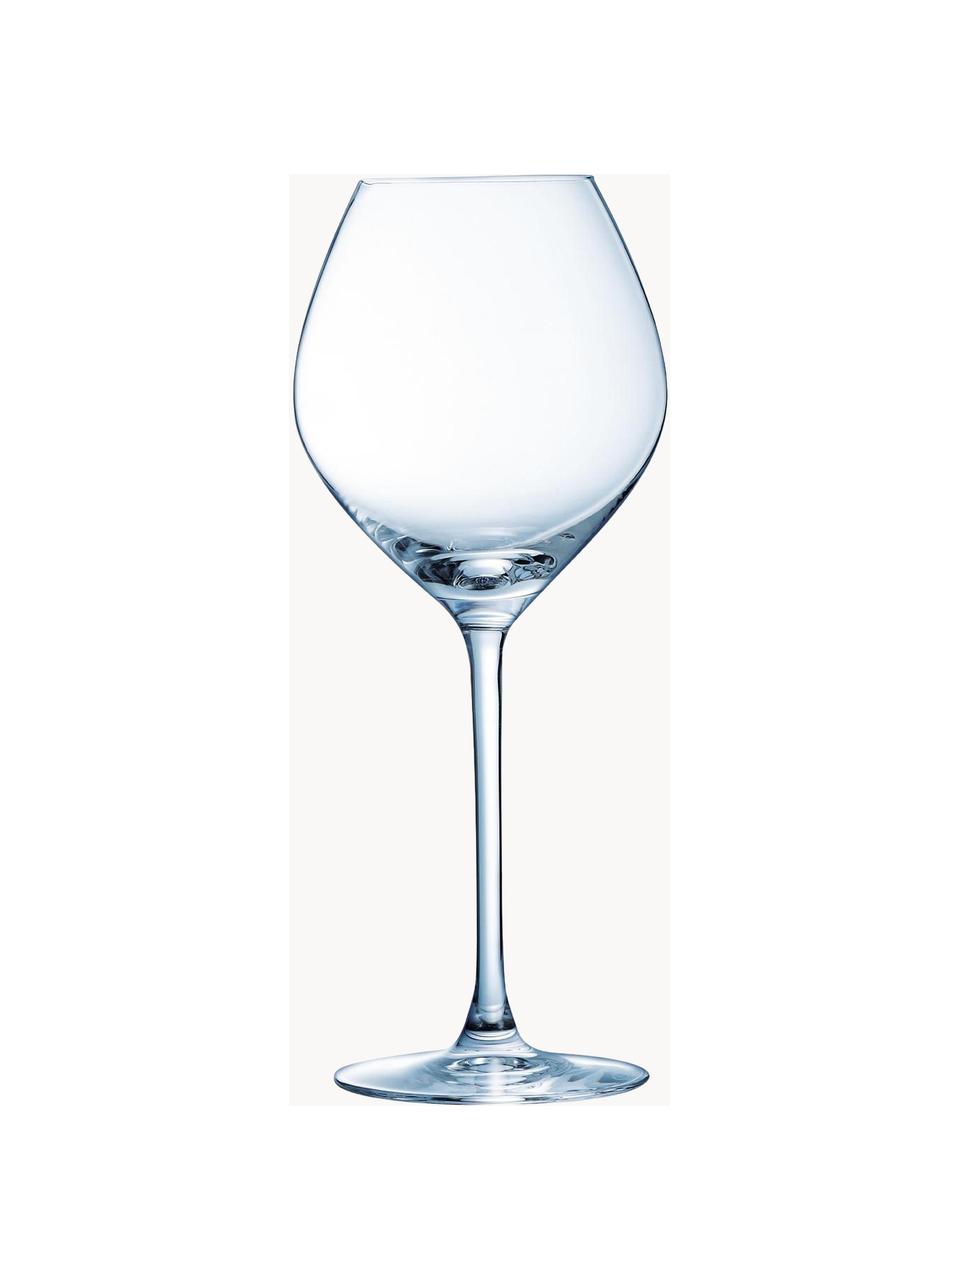 Rotweingläser Magnifique, 6 Stück, Glas, Transparent, Ø 9 x H 23 cm, 350 ml